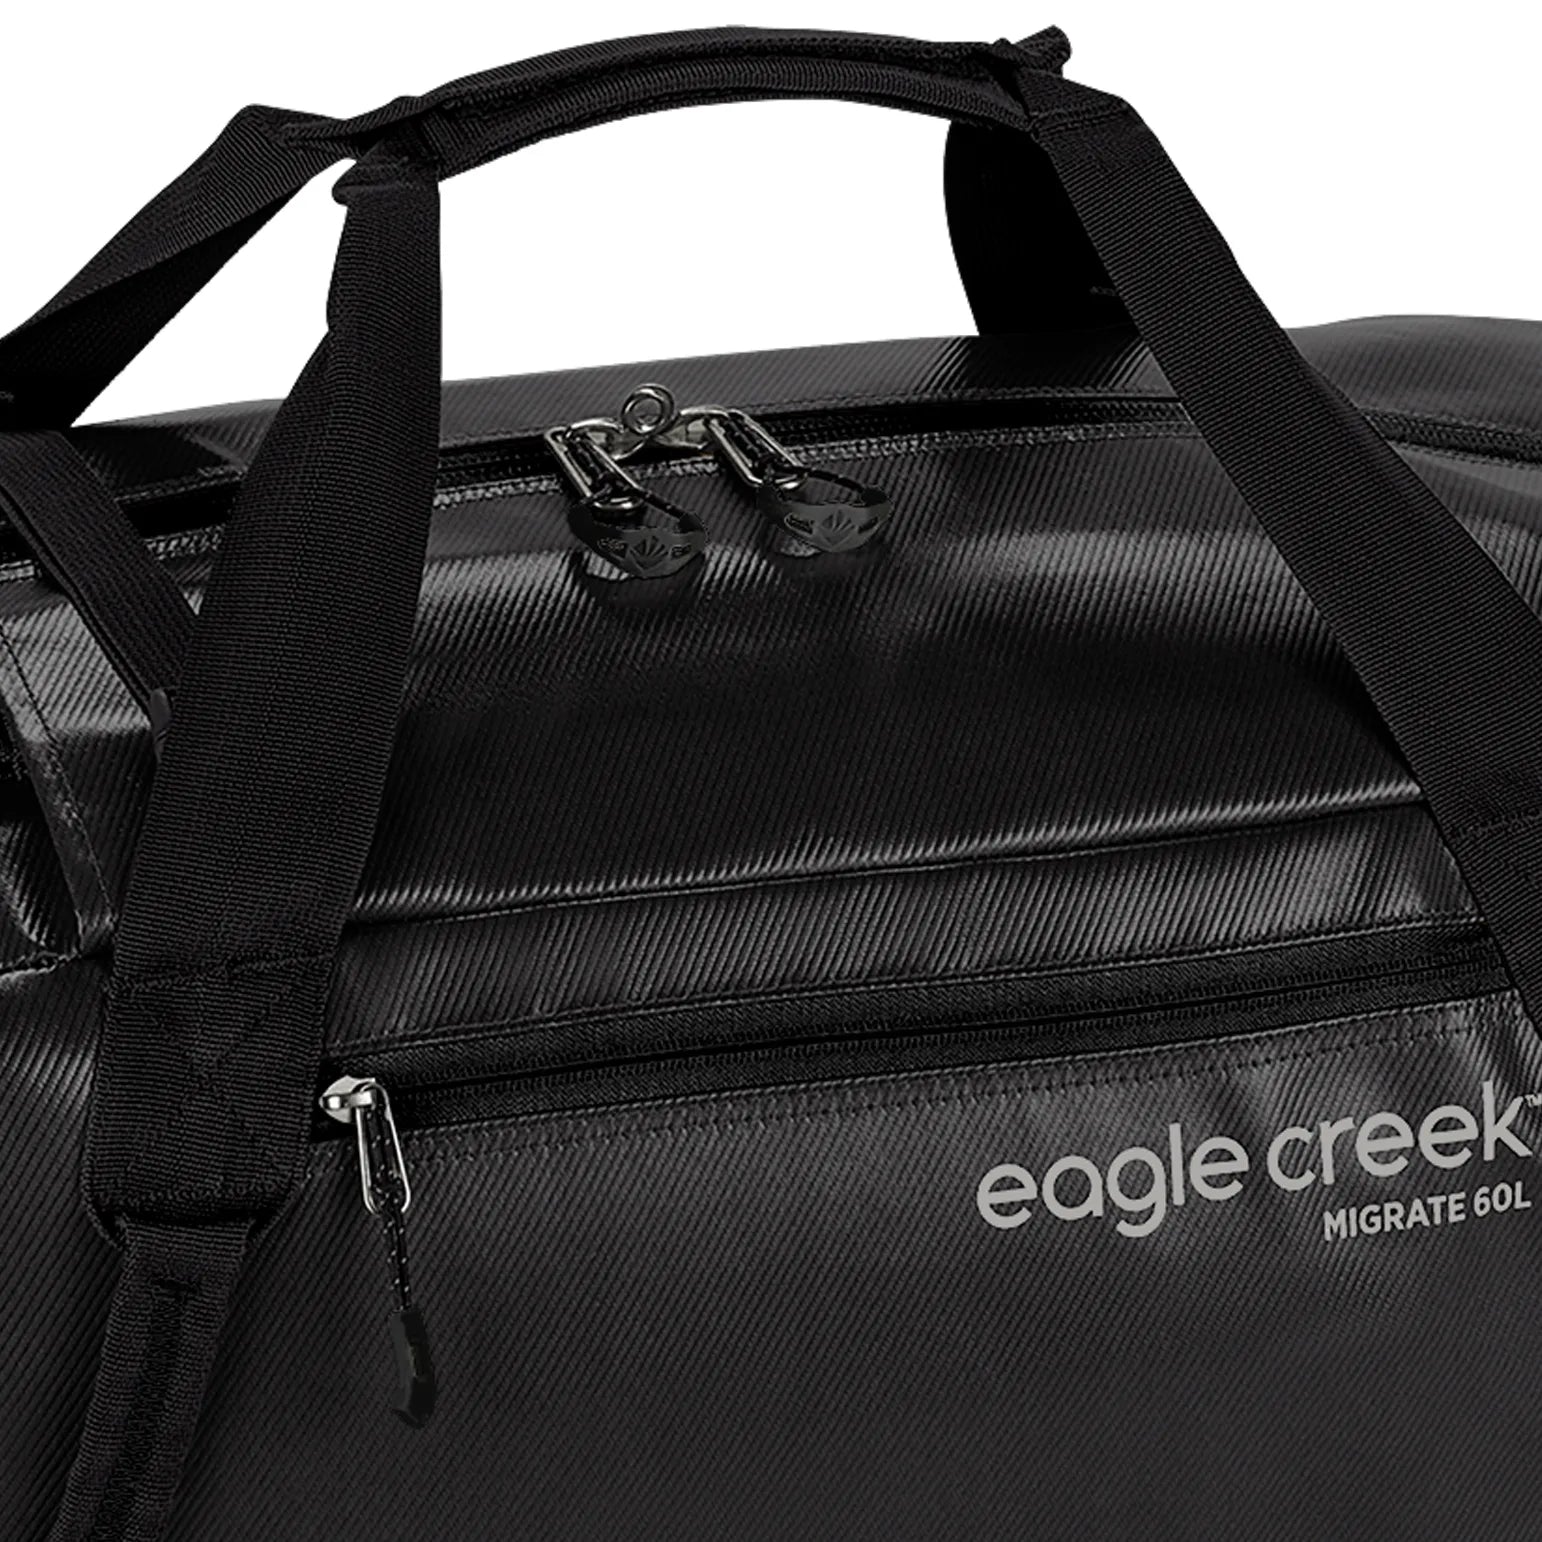 Eagle Creek Migrate Travel Bag 59 cm - Rush Blue